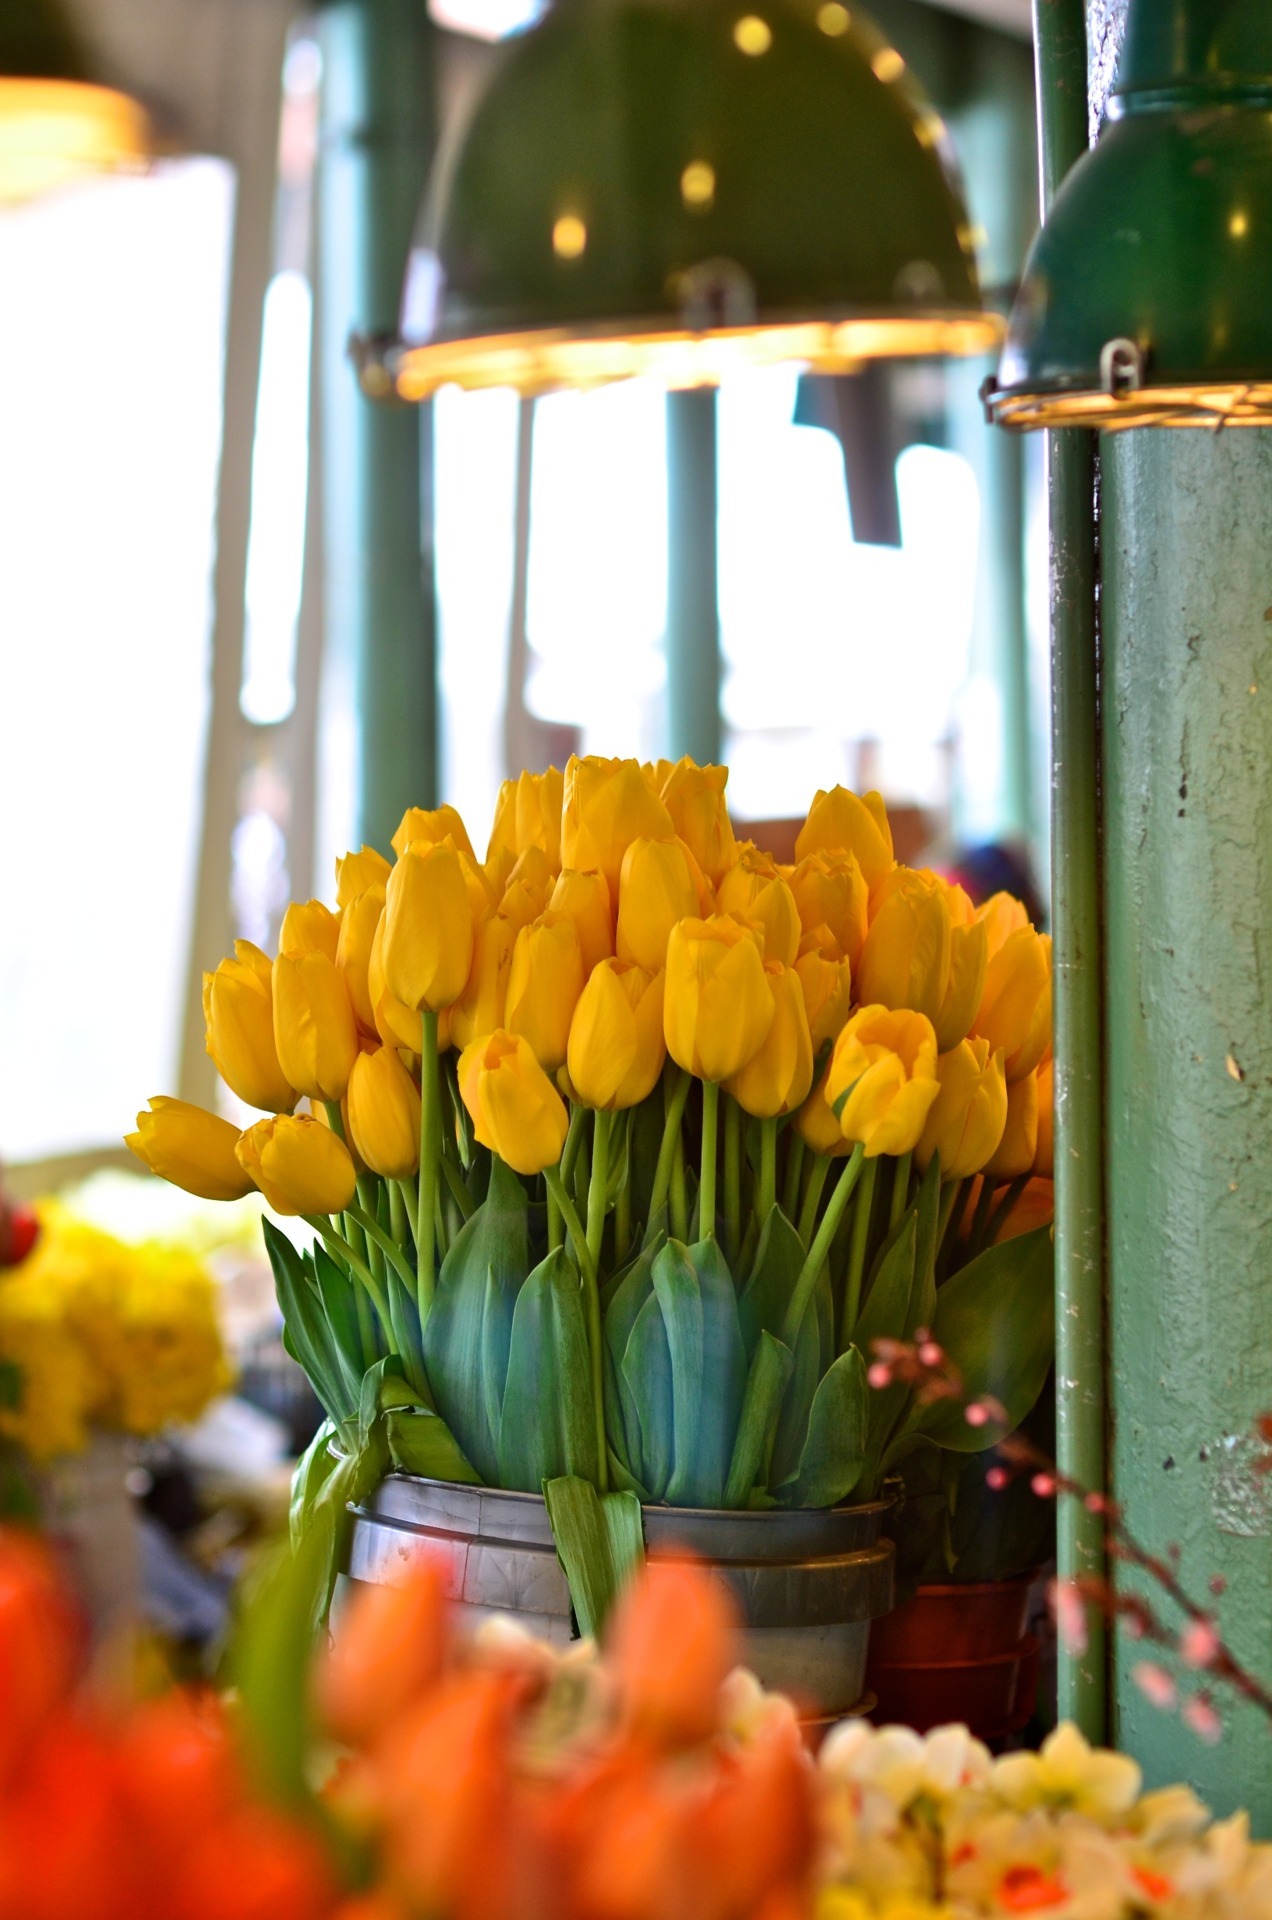 Тюльпаны на балконе зимой. Тюльпаны в интерьере. Желтые тюльпаны. Букет желтых тюльпанов. Букет тюльпанов в интерьере.